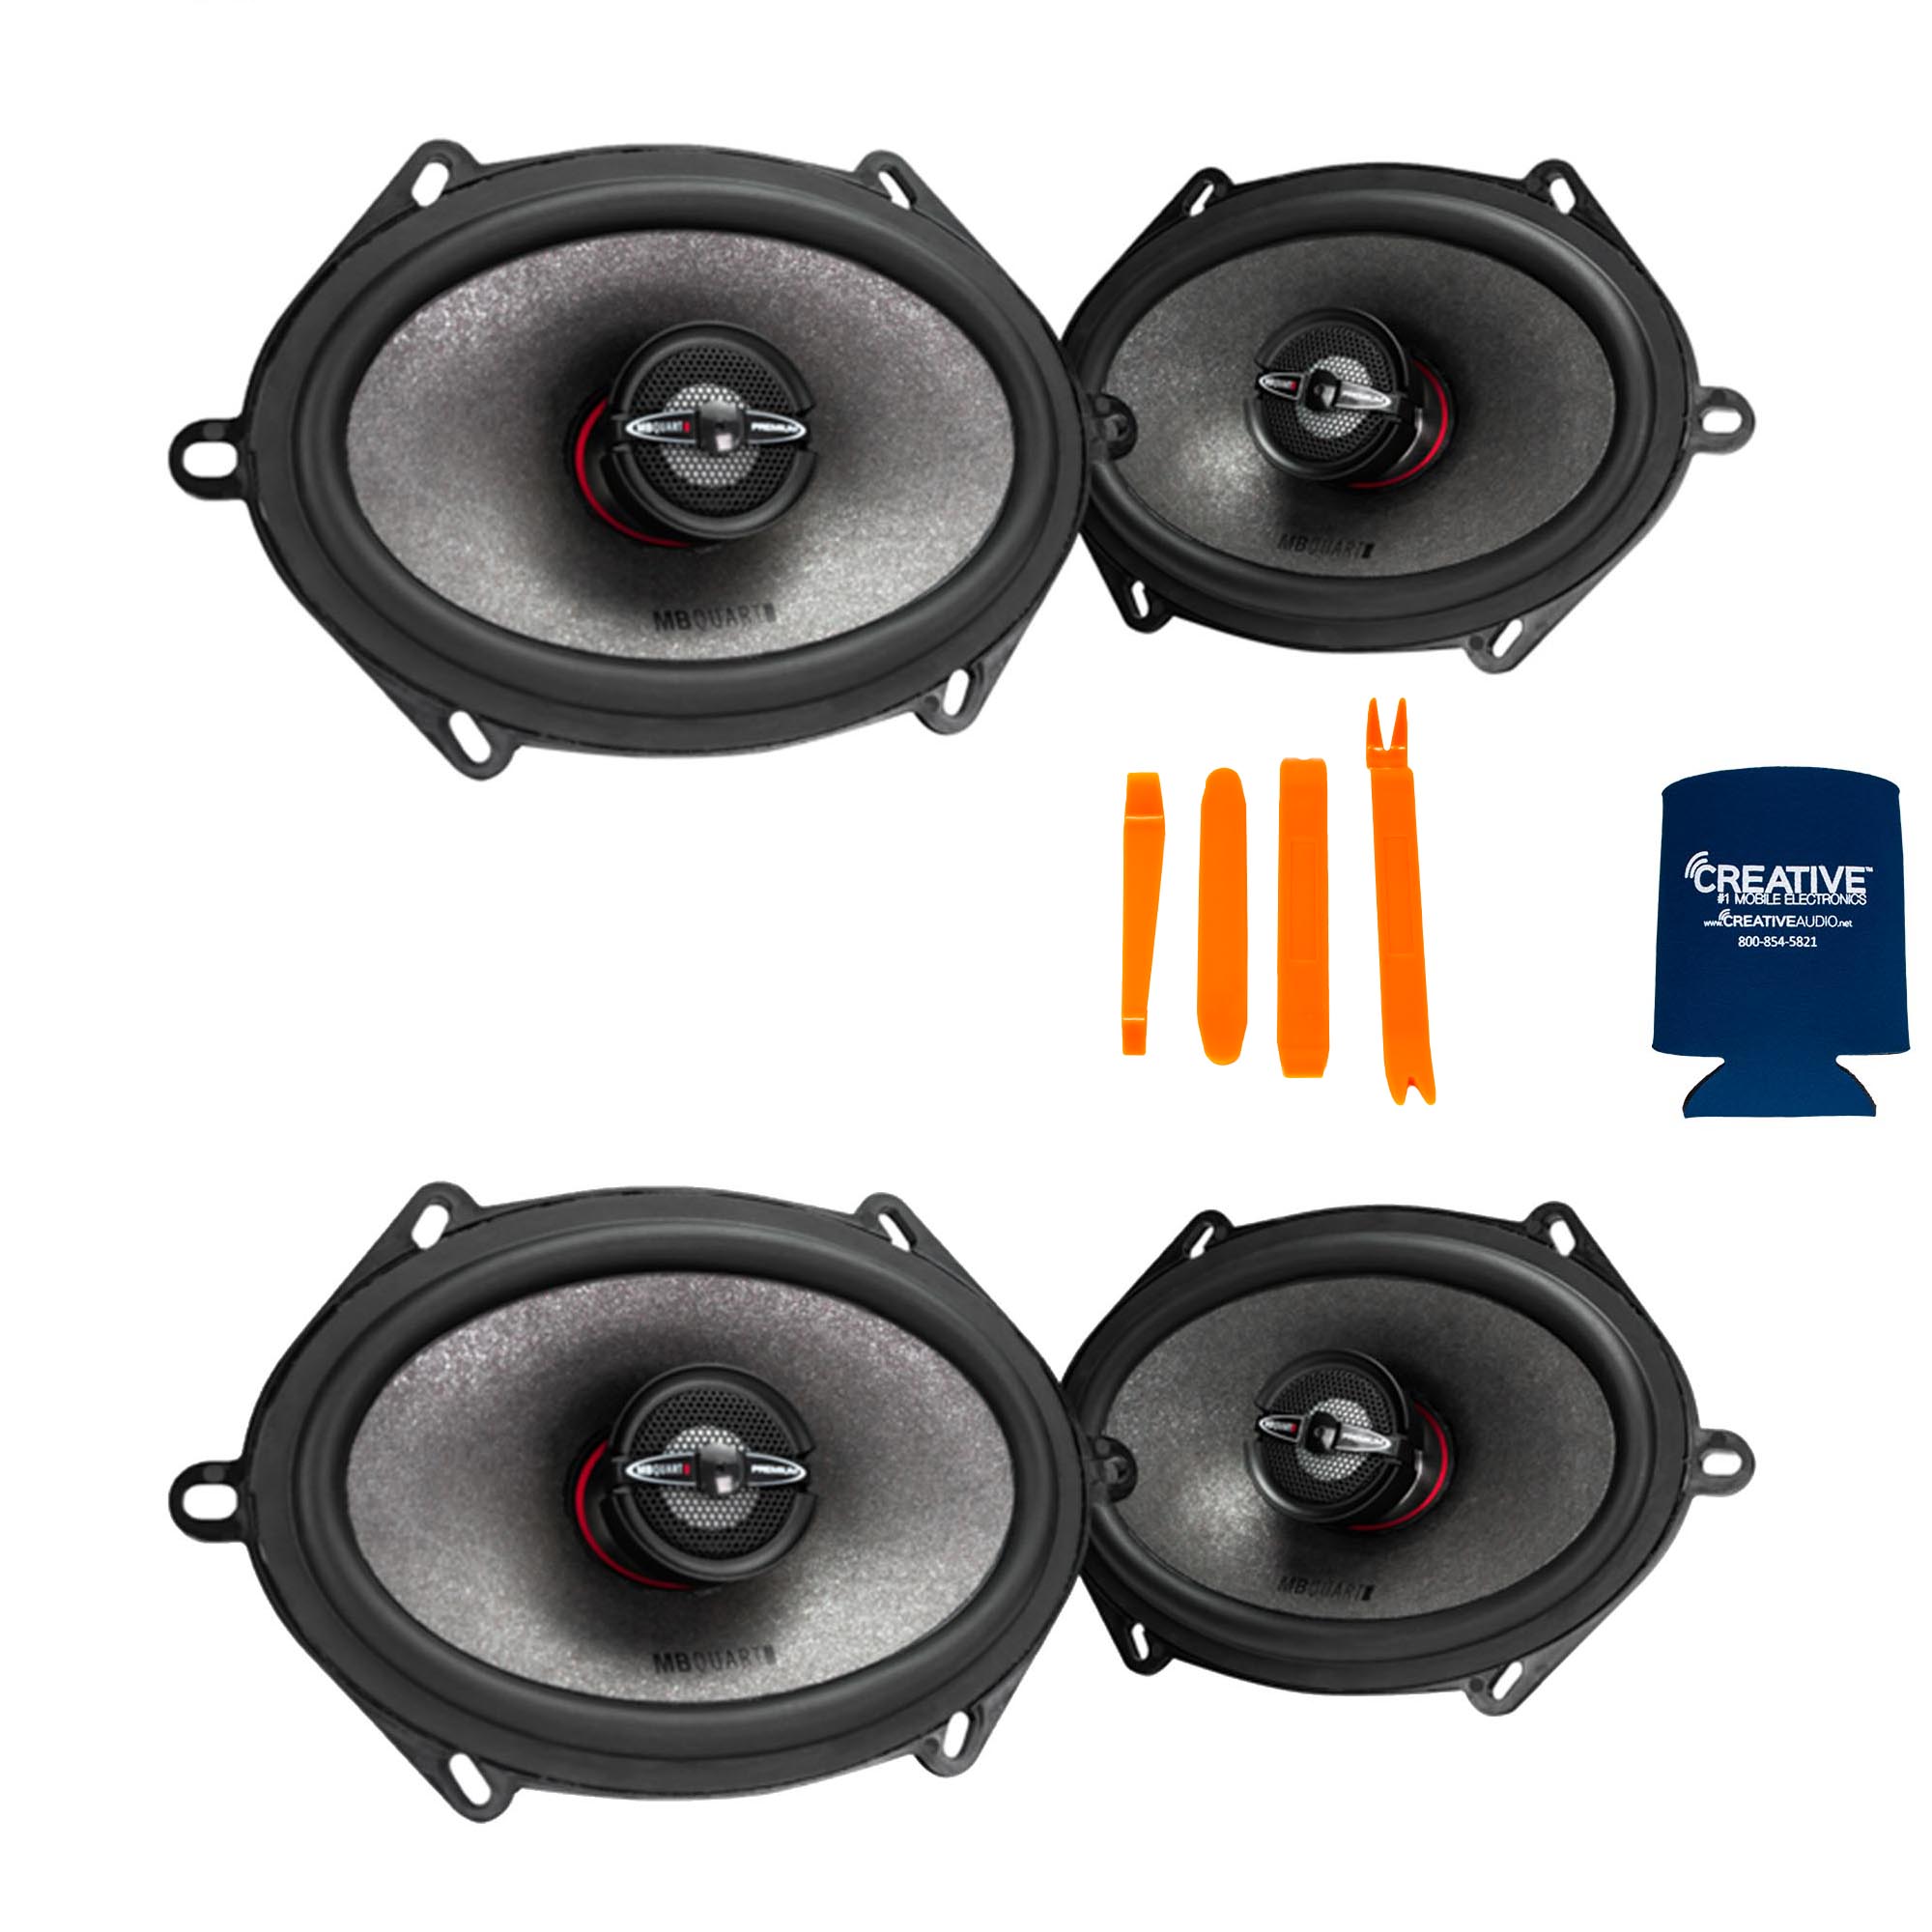 MB Quart - 2-Pairs of Premium PK1-168 5x7/6x8" Coaxial Speakers